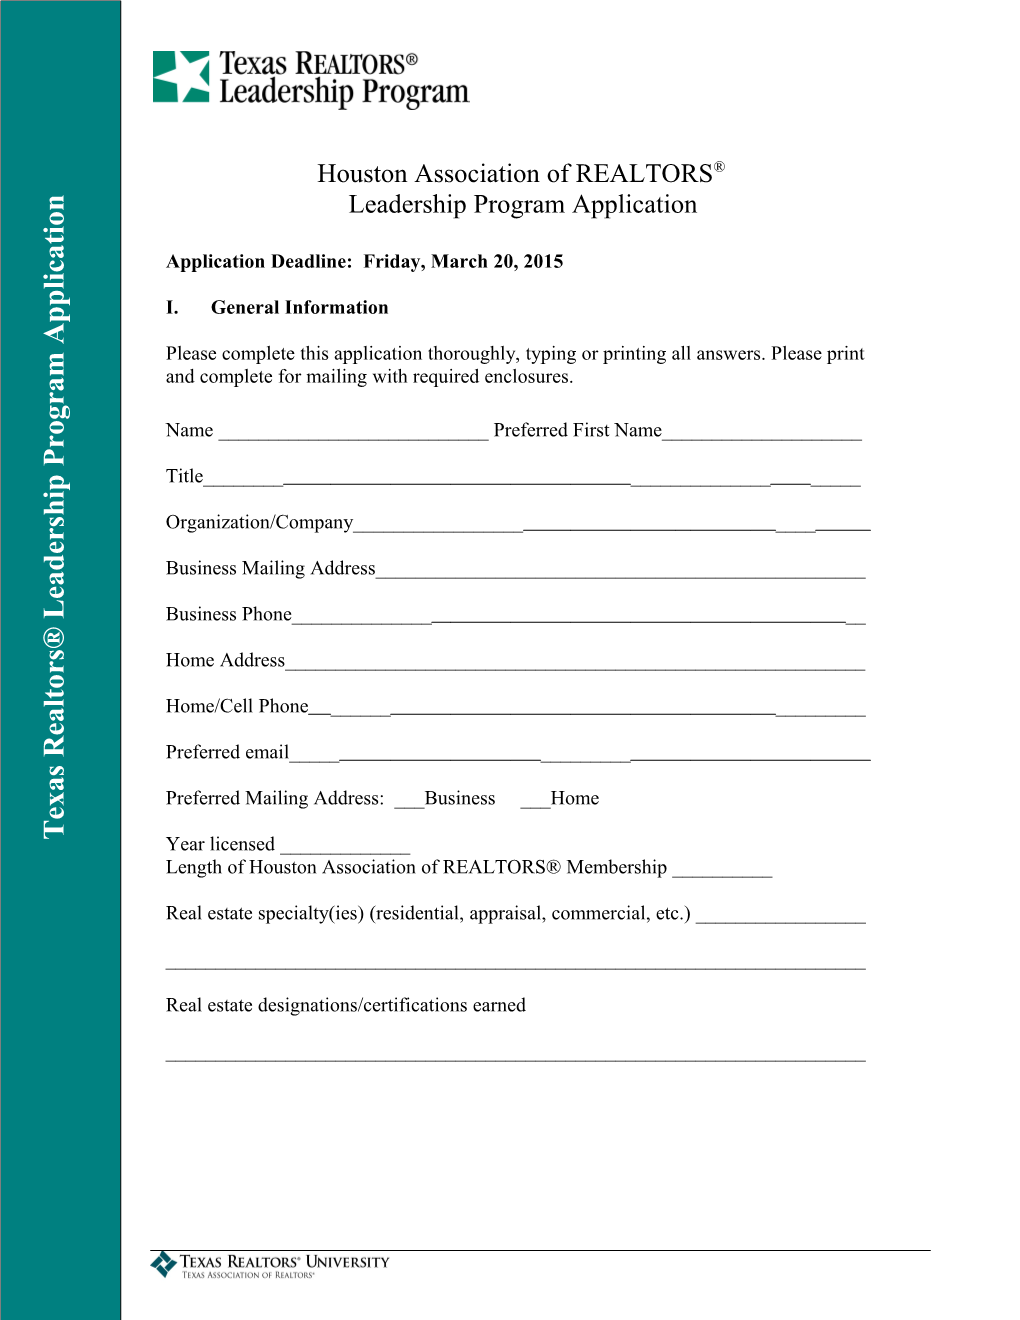 SABOR Leadership Program Application